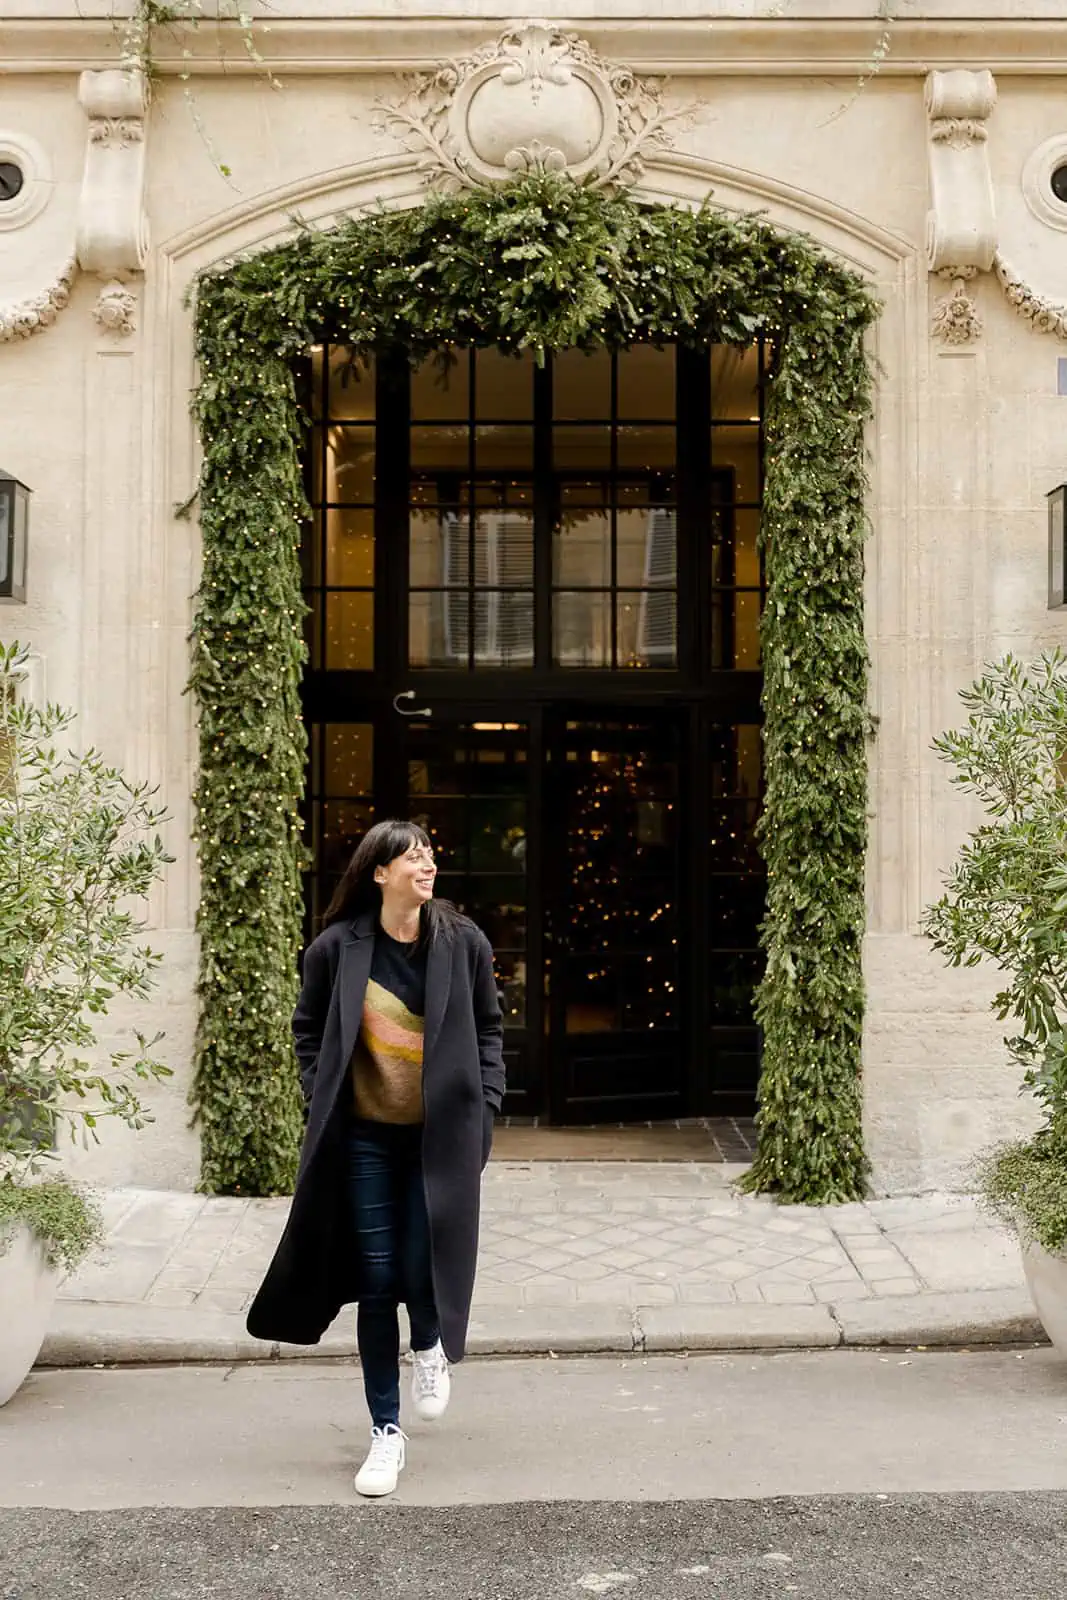 rebecca plotnick checking into faubourg saint germain paris hotel 